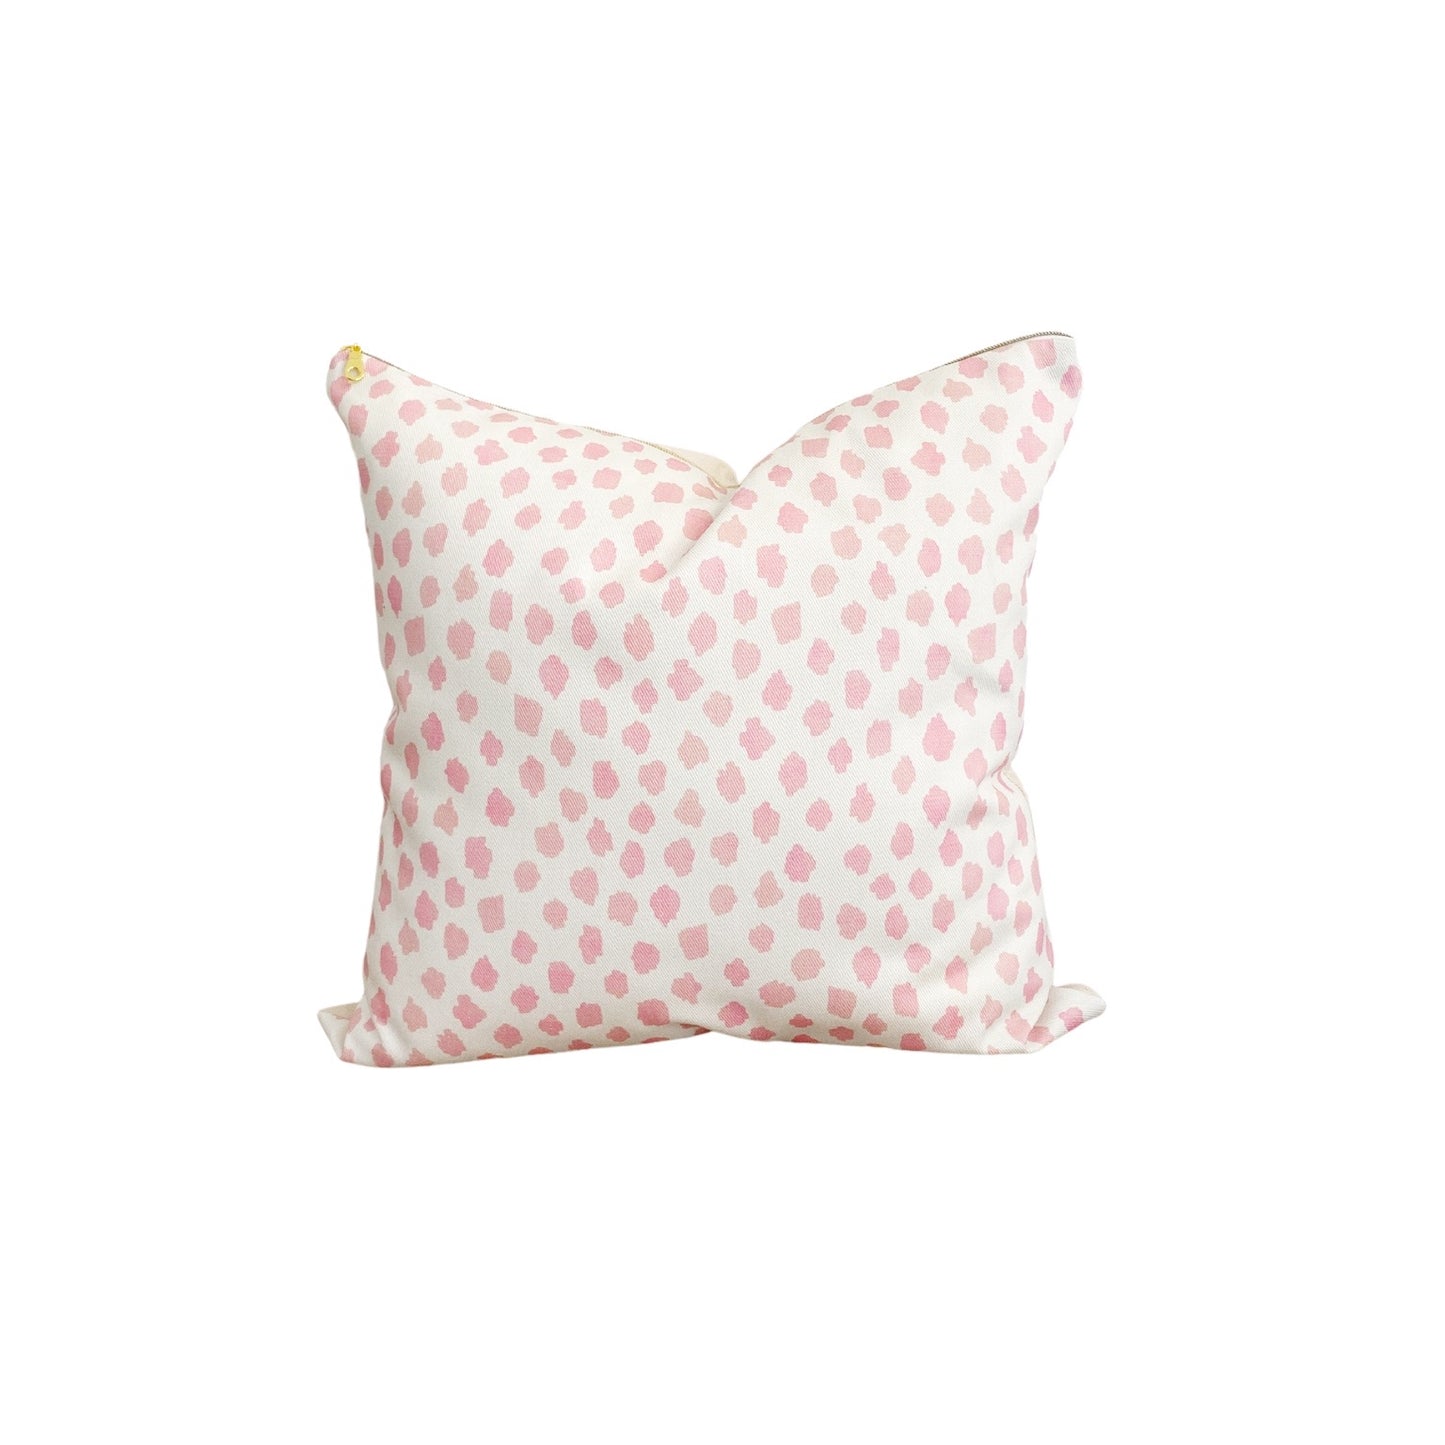 Pink Spots Pillow Cover - Designed by Danika Herrick